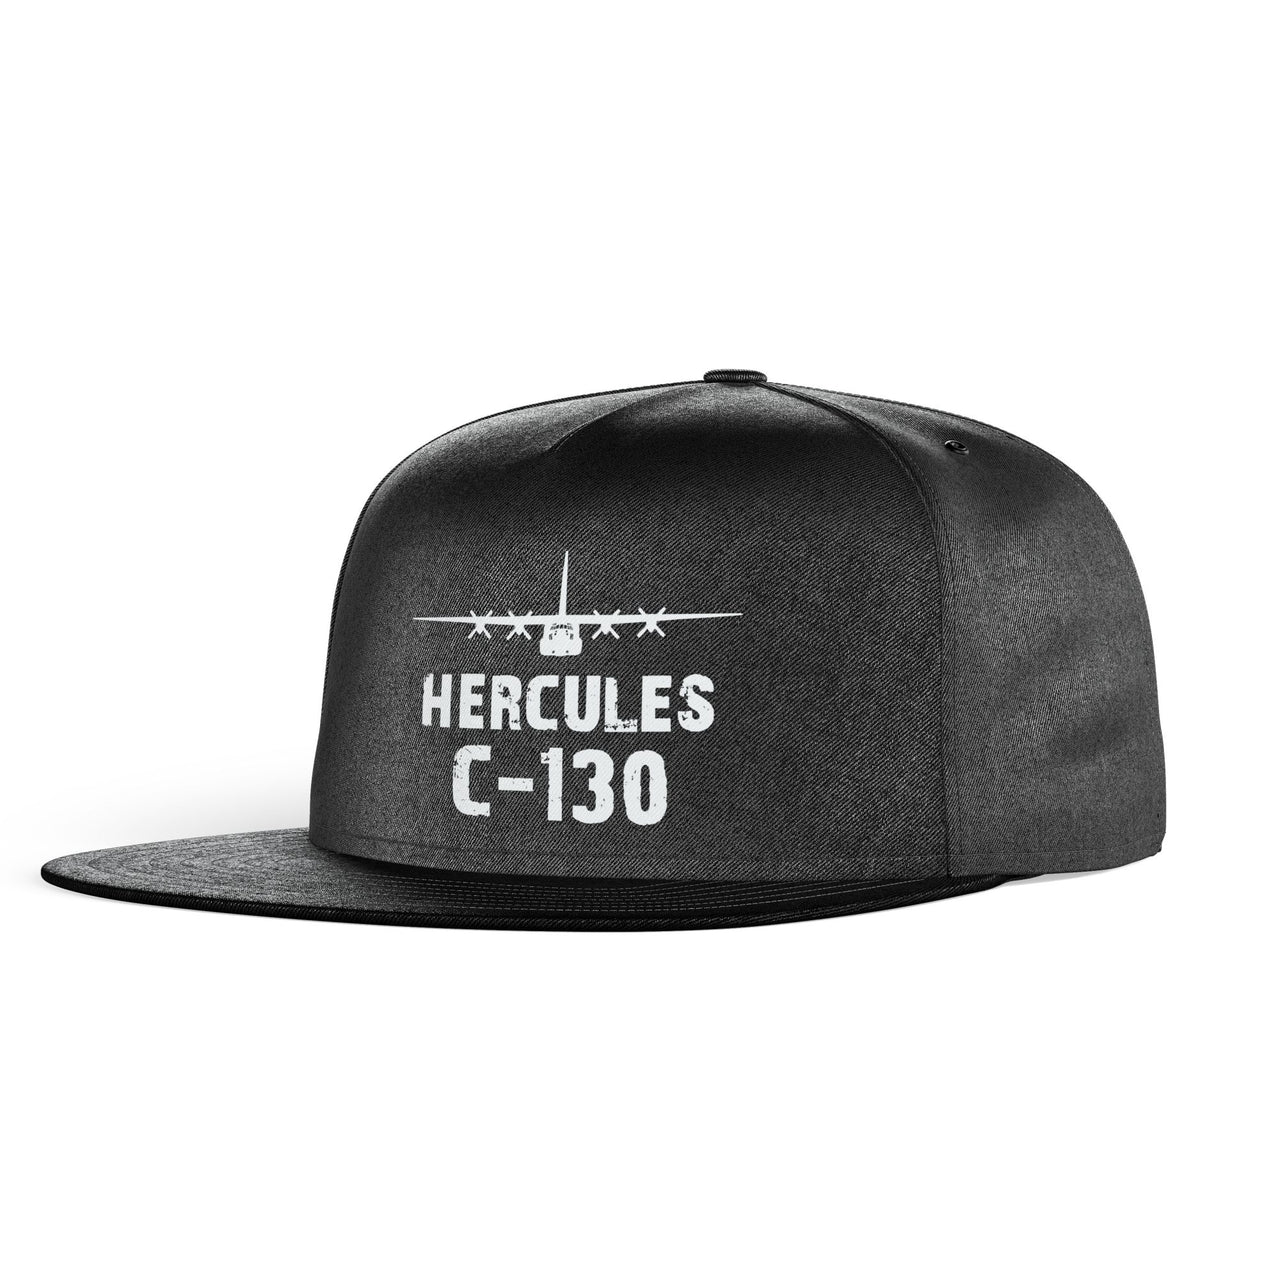 Hercules C-130 & Plane Designed Snapback Caps & Hats